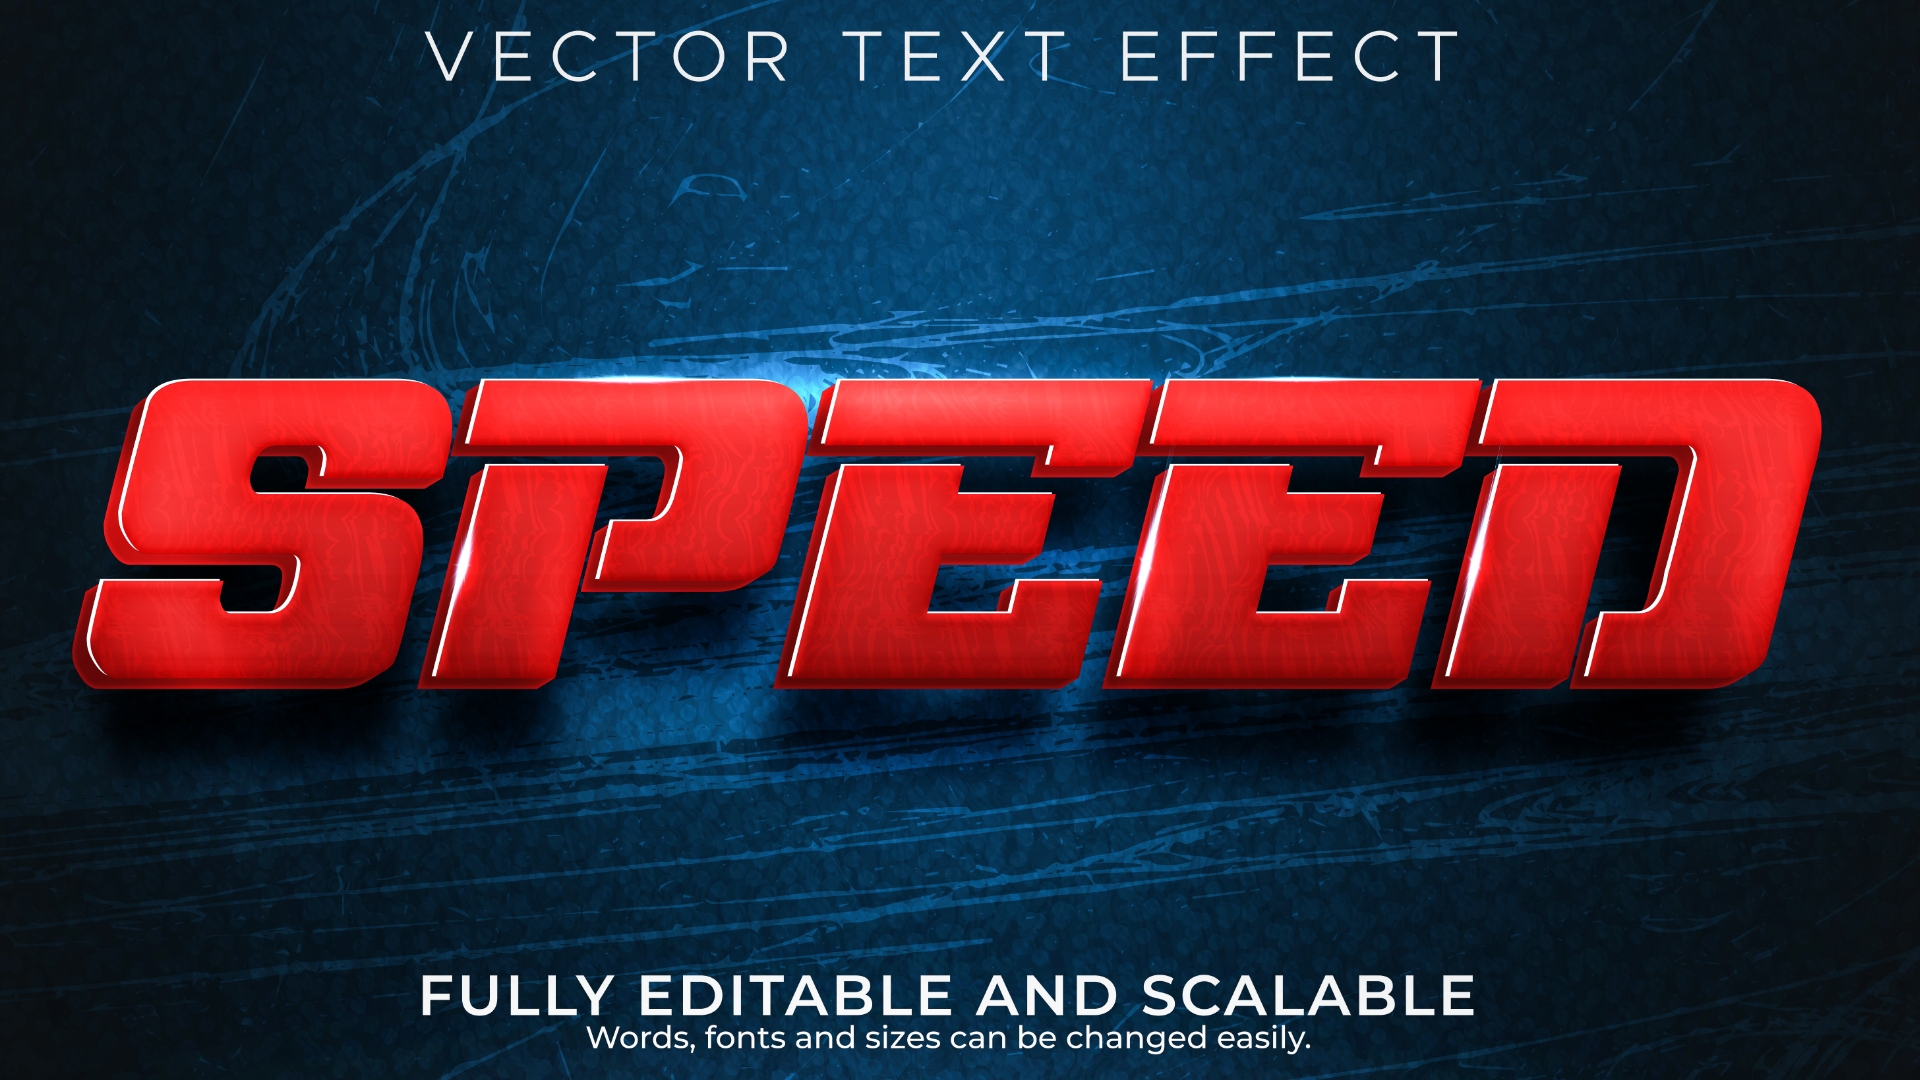 Стиль текста Спеед ап. Speed font.